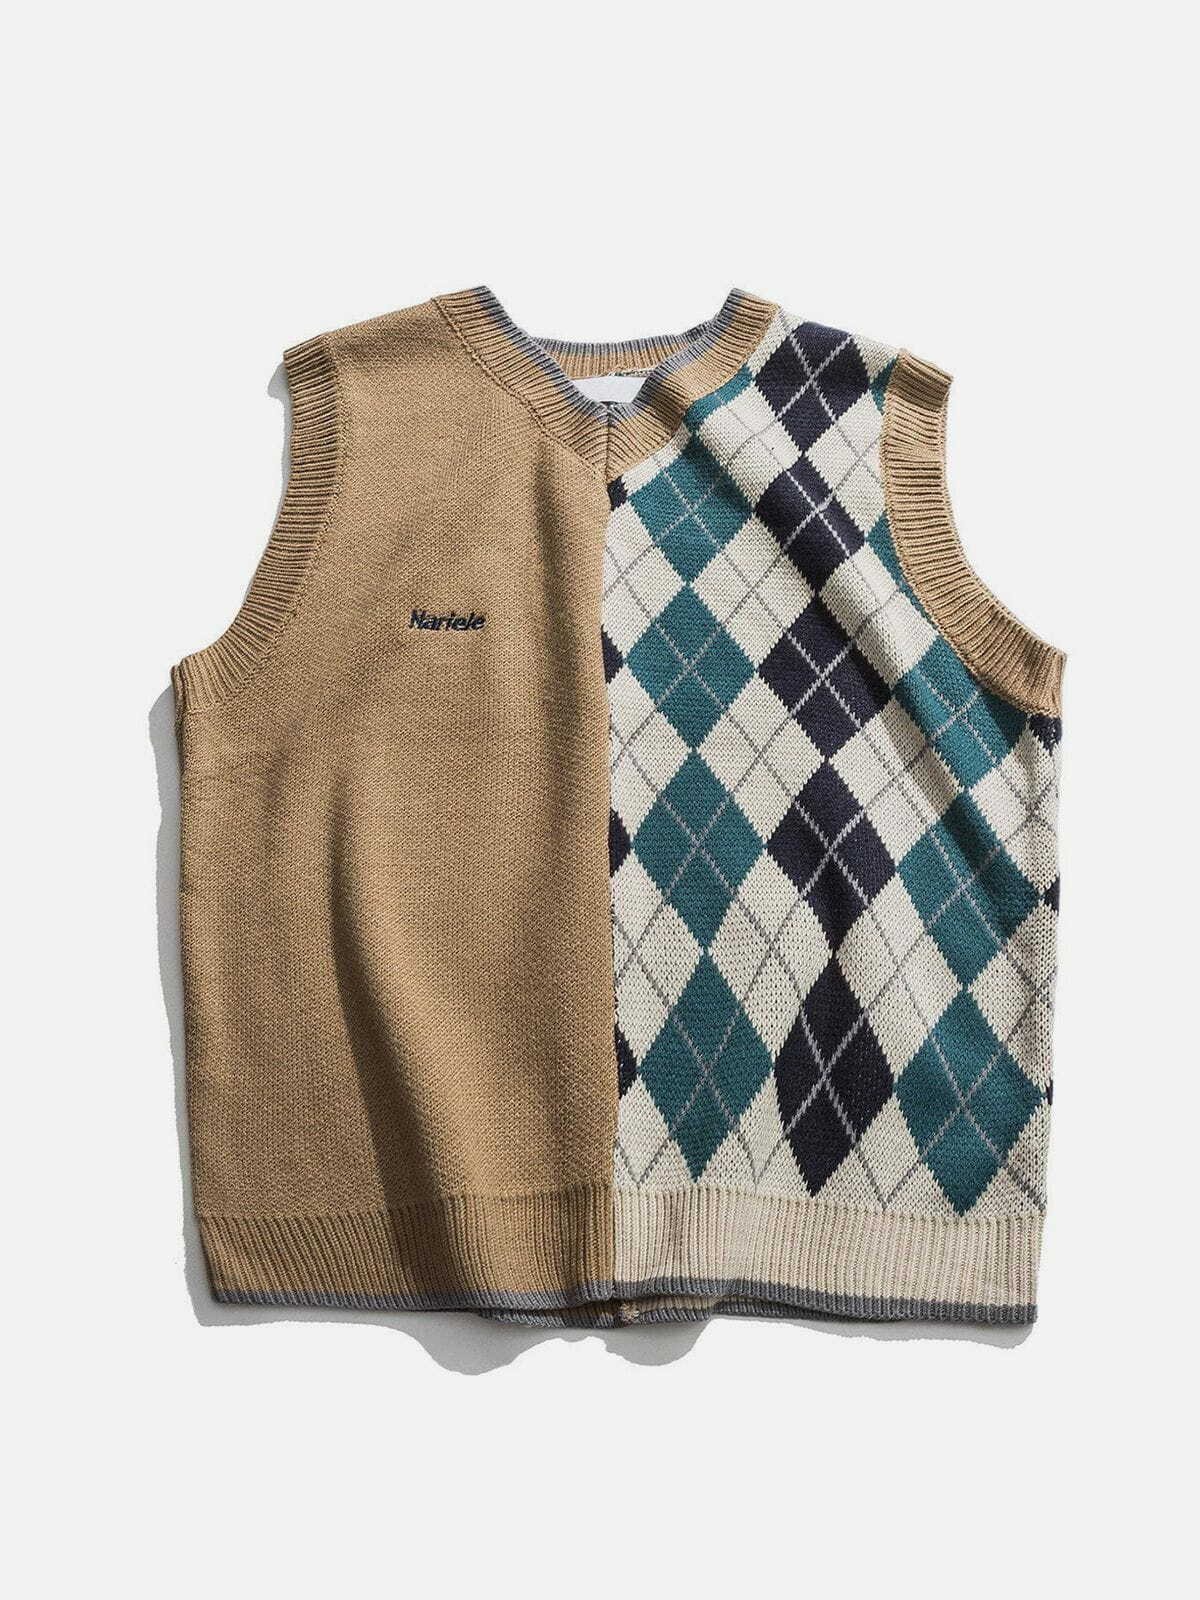 diamond stitch sweater vest edgy streetwear essential 6500